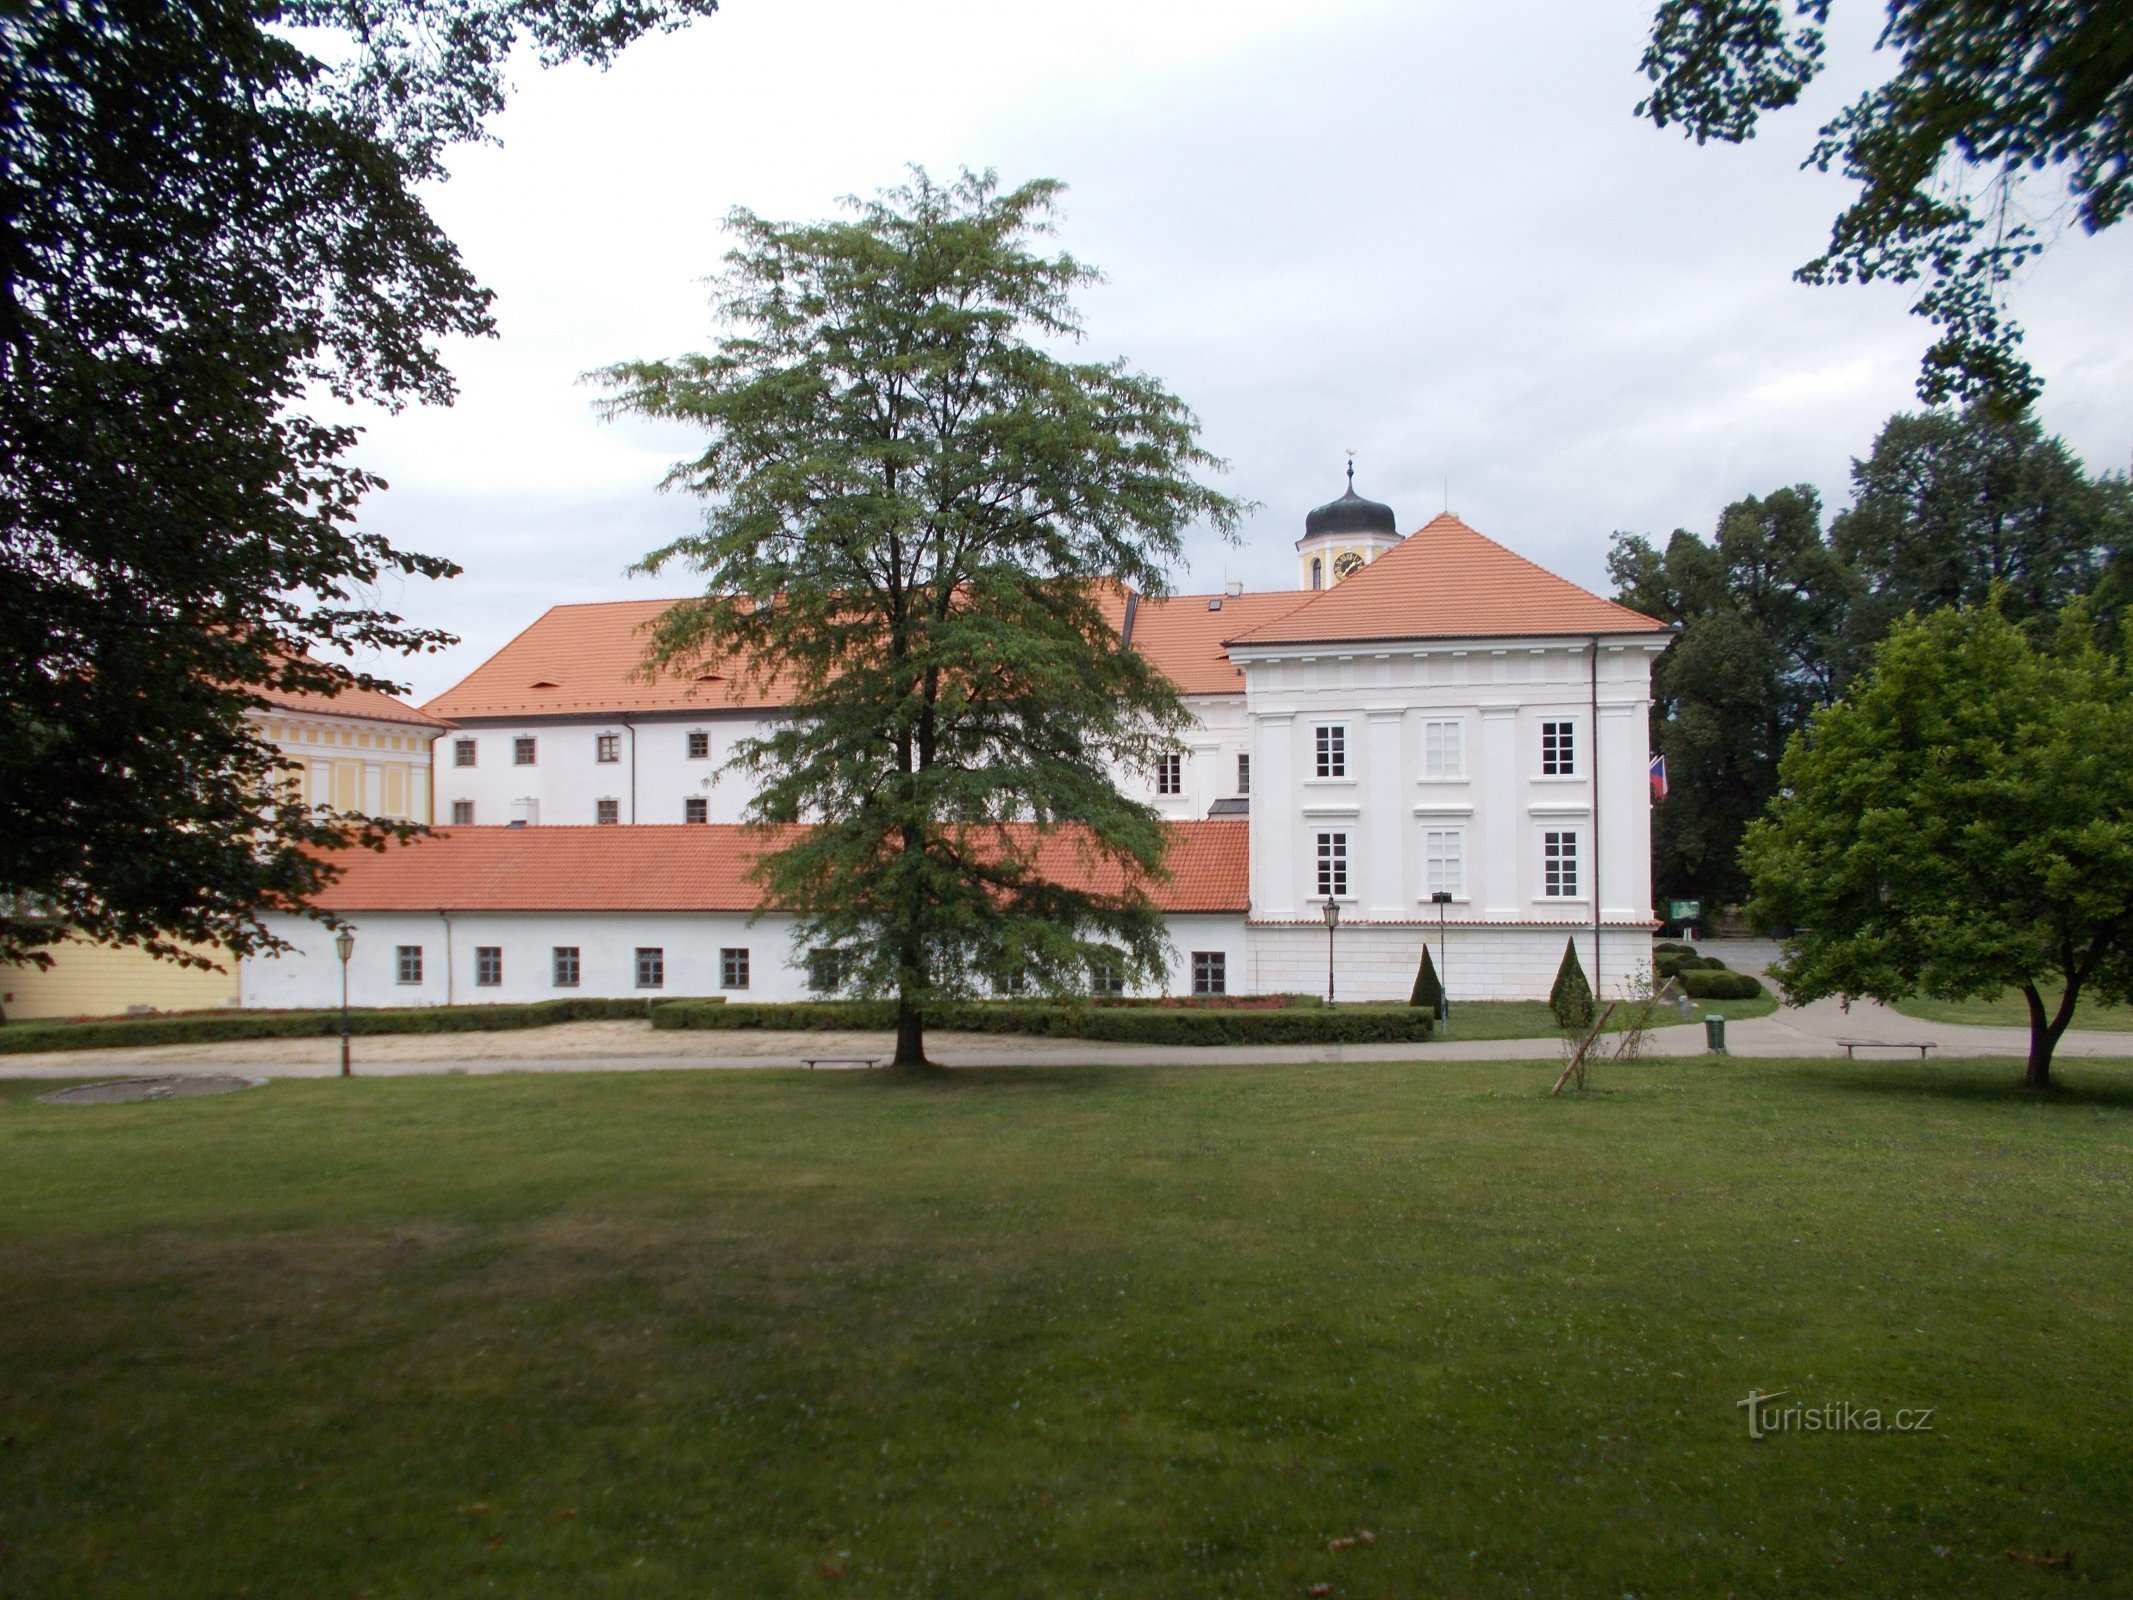 Parque del castillo de Vlašim - castillo